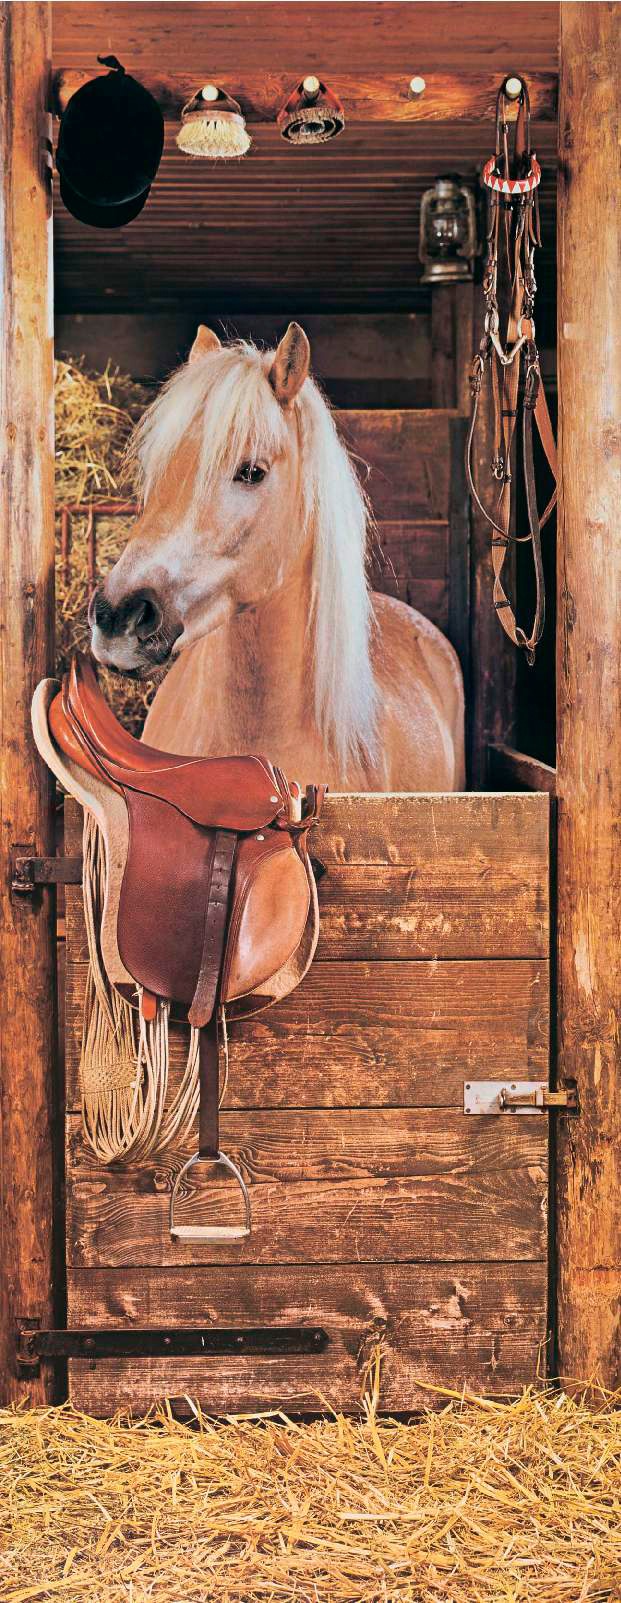 Papermoon Fototapete »Horse in Stable - Türtapete«, matt